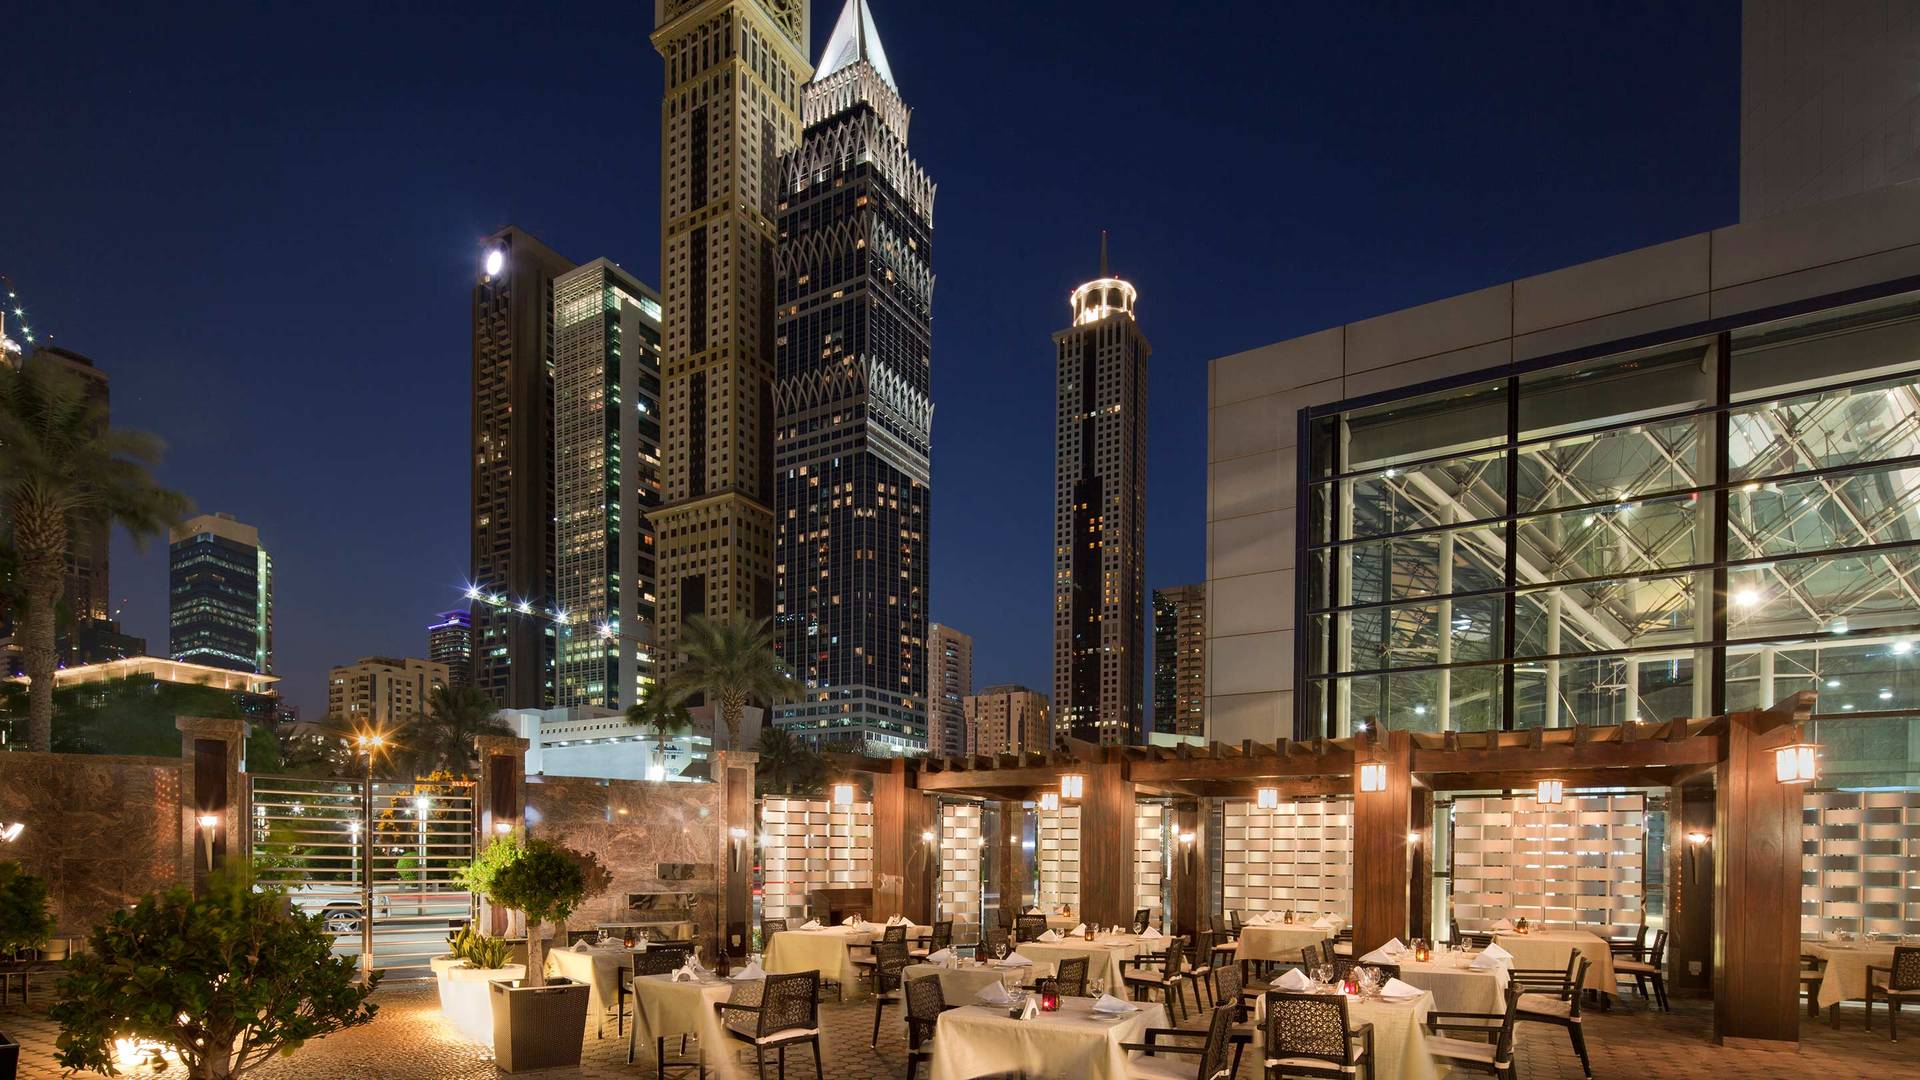 Das Restaurant Al Nafoorah im Jumeirah Emirates Towers